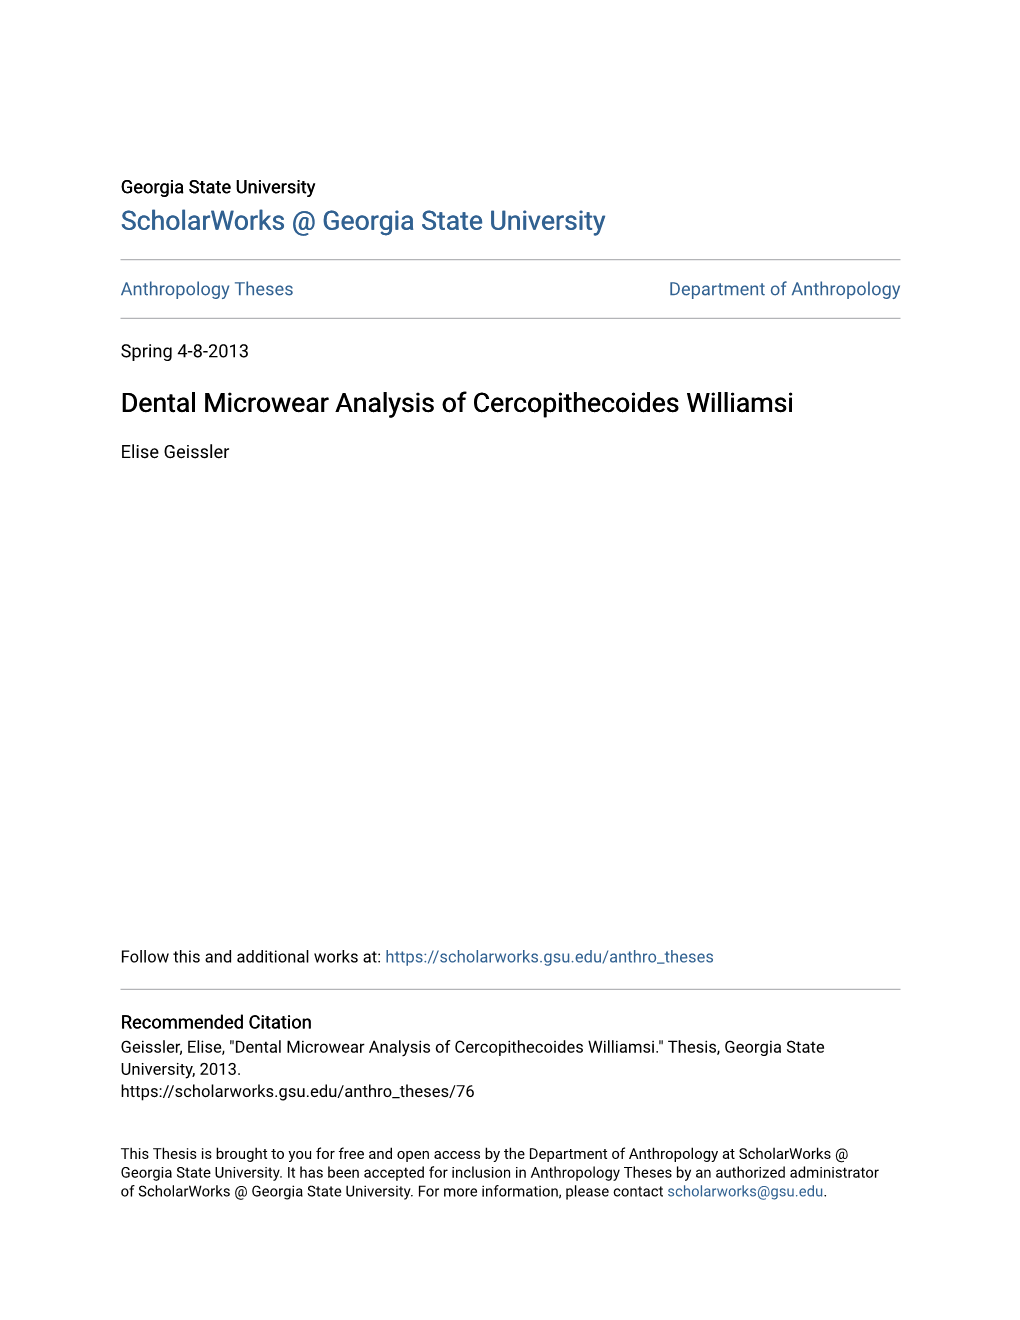 Dental Microwear Analysis of Cercopithecoides Williamsi